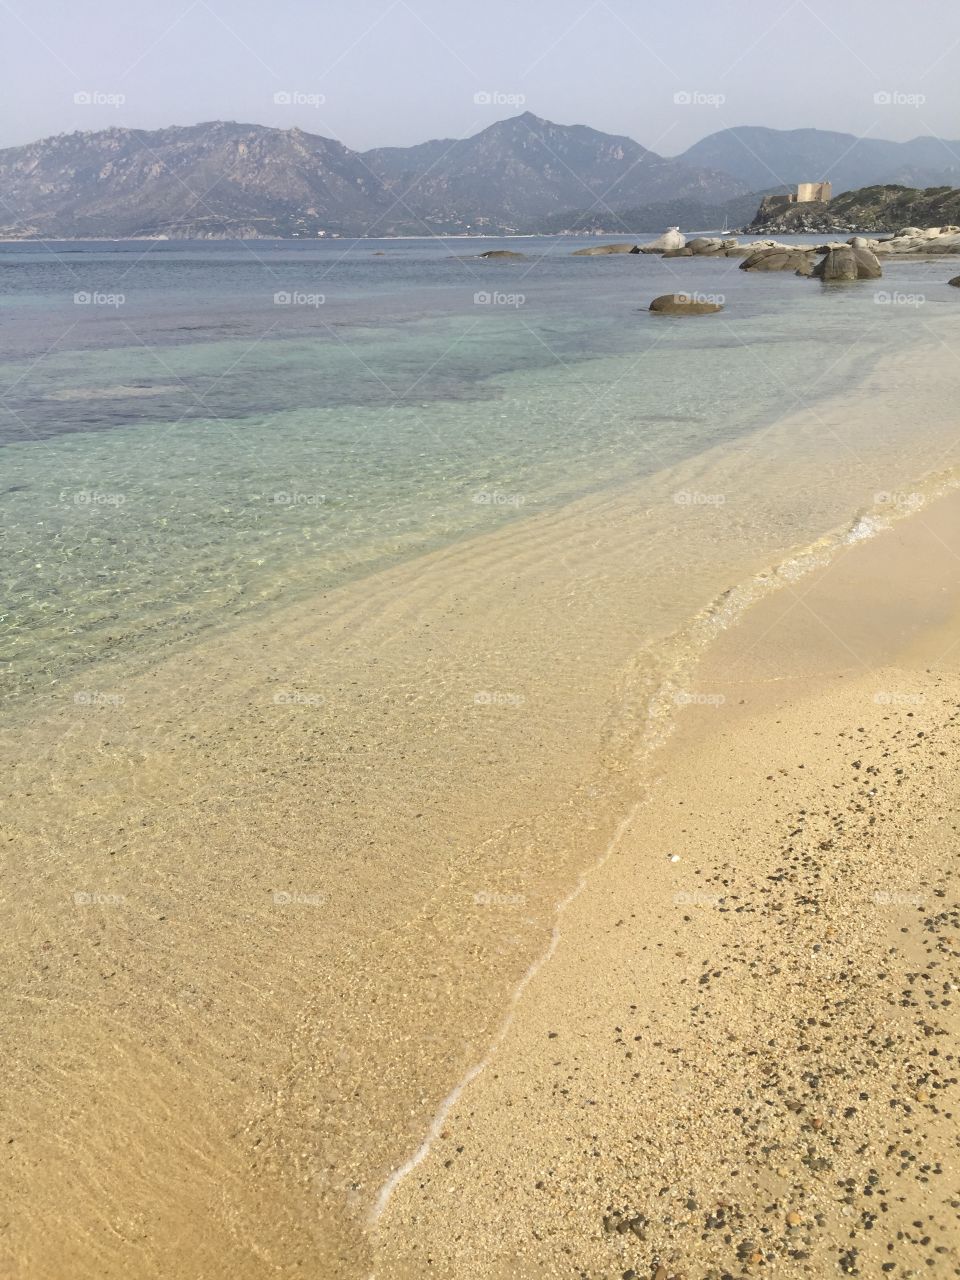 Sardegna beach